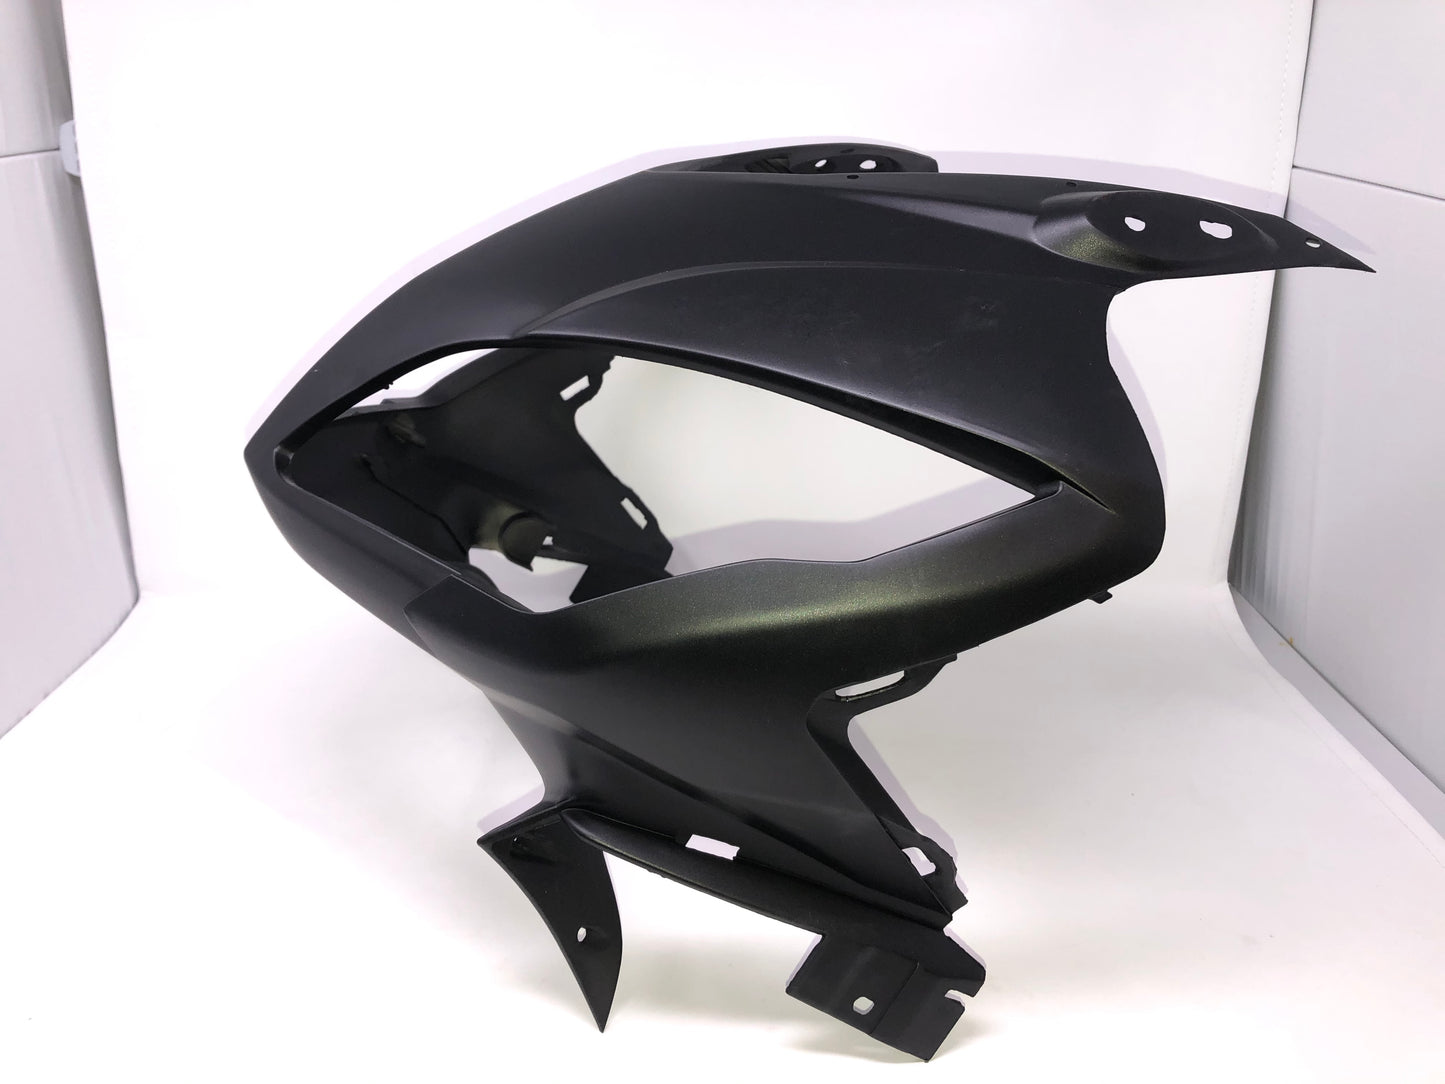 Venom X22 headlight fairing for sale. 